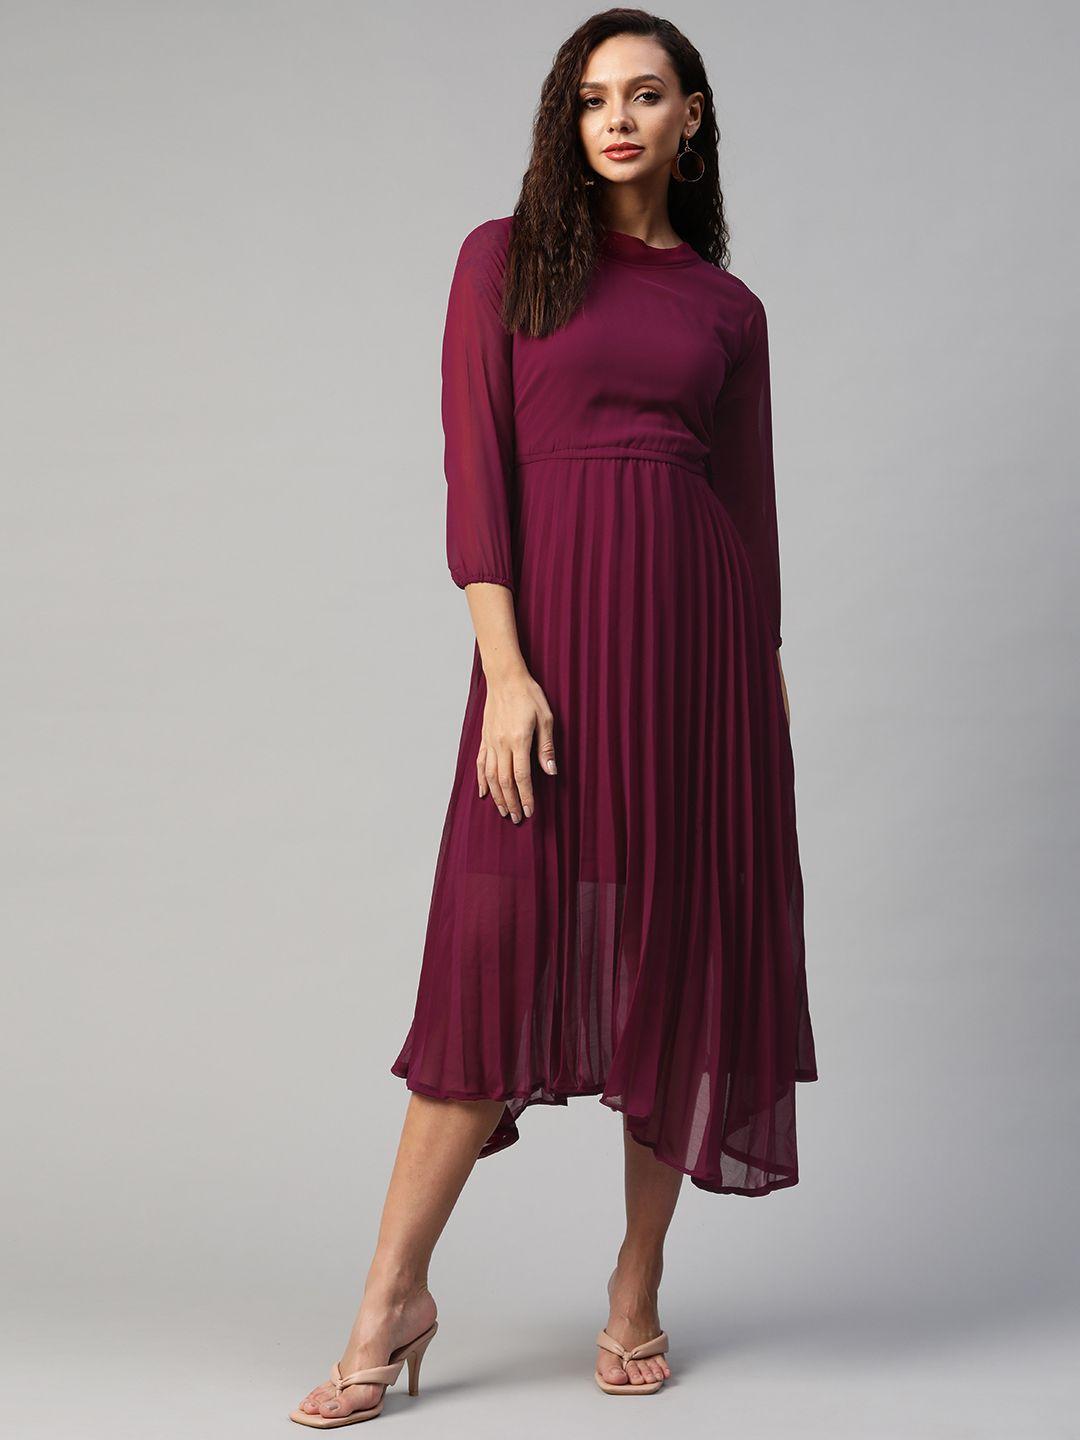 aarika-women-burgundy-solid-a-line-midi-dress